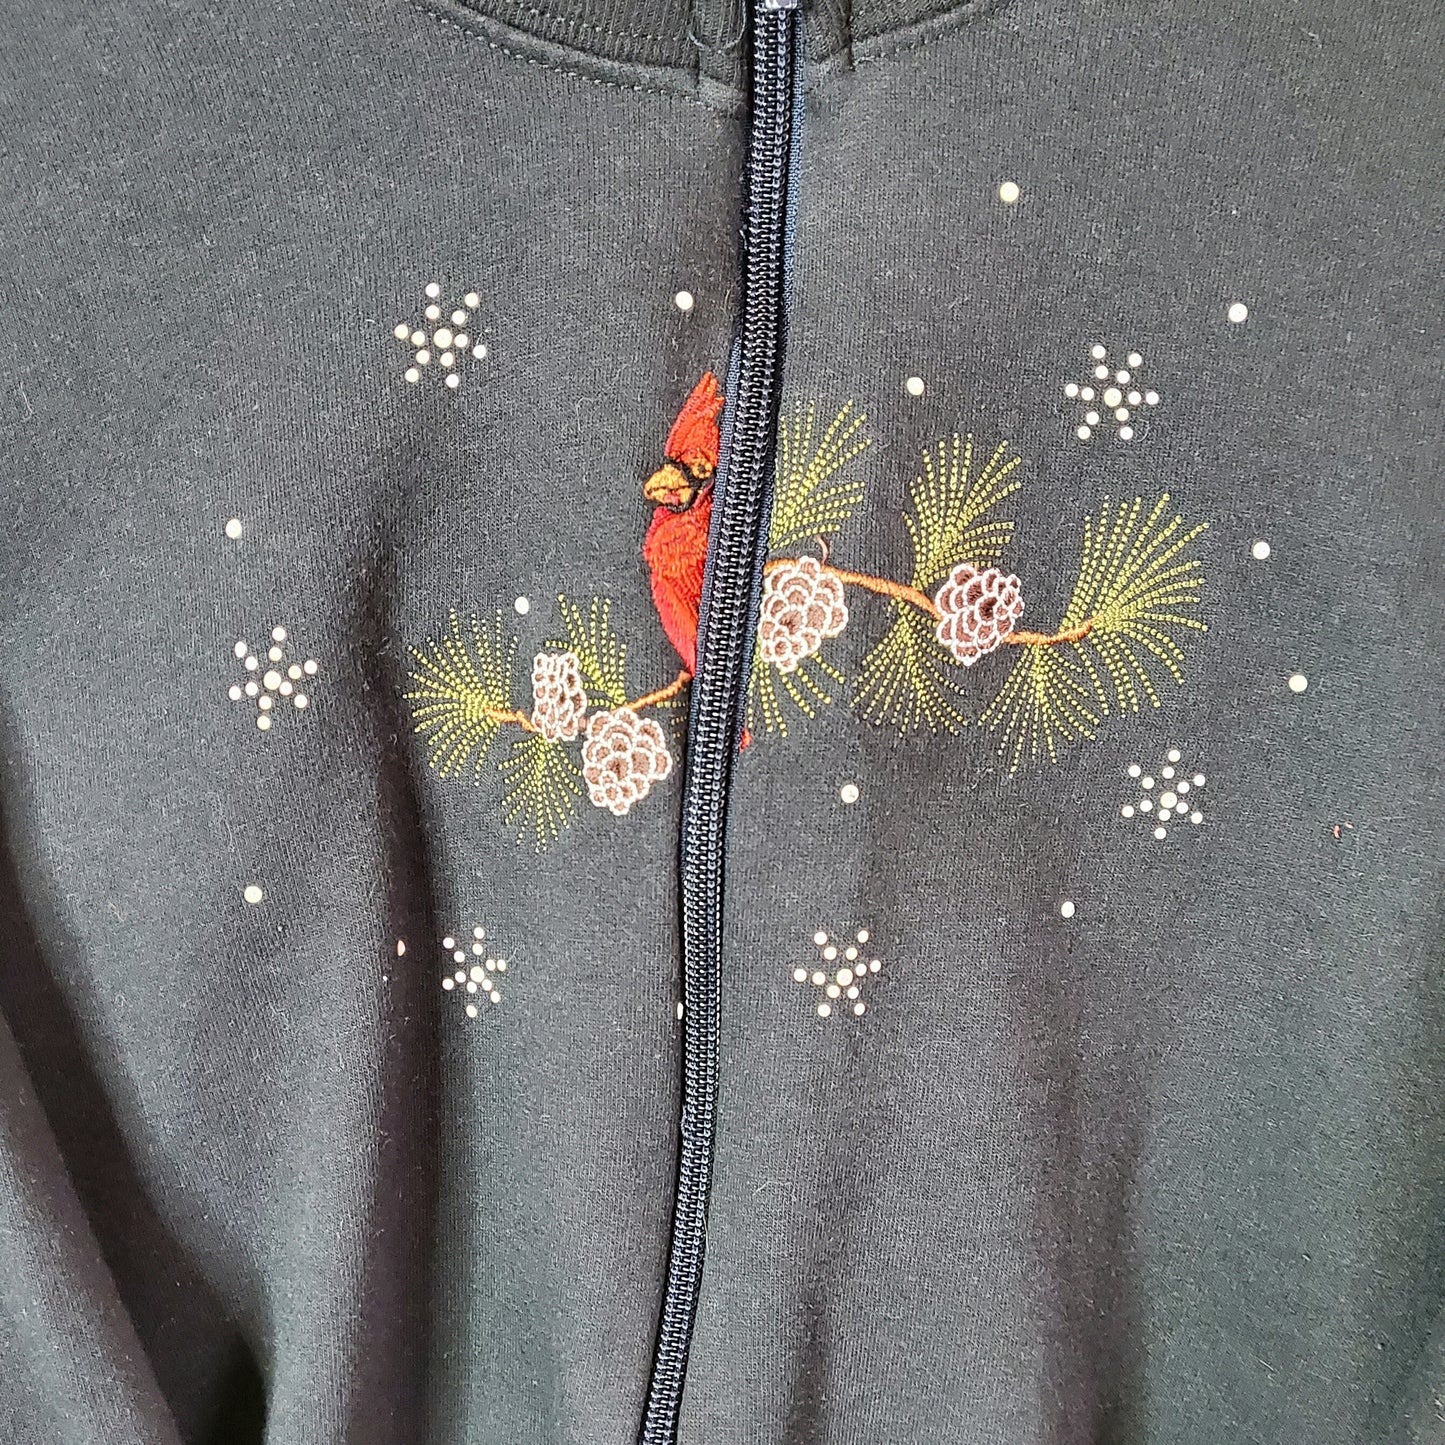 Reworked Vintage Embroidered Sweatshirt | Size M/L